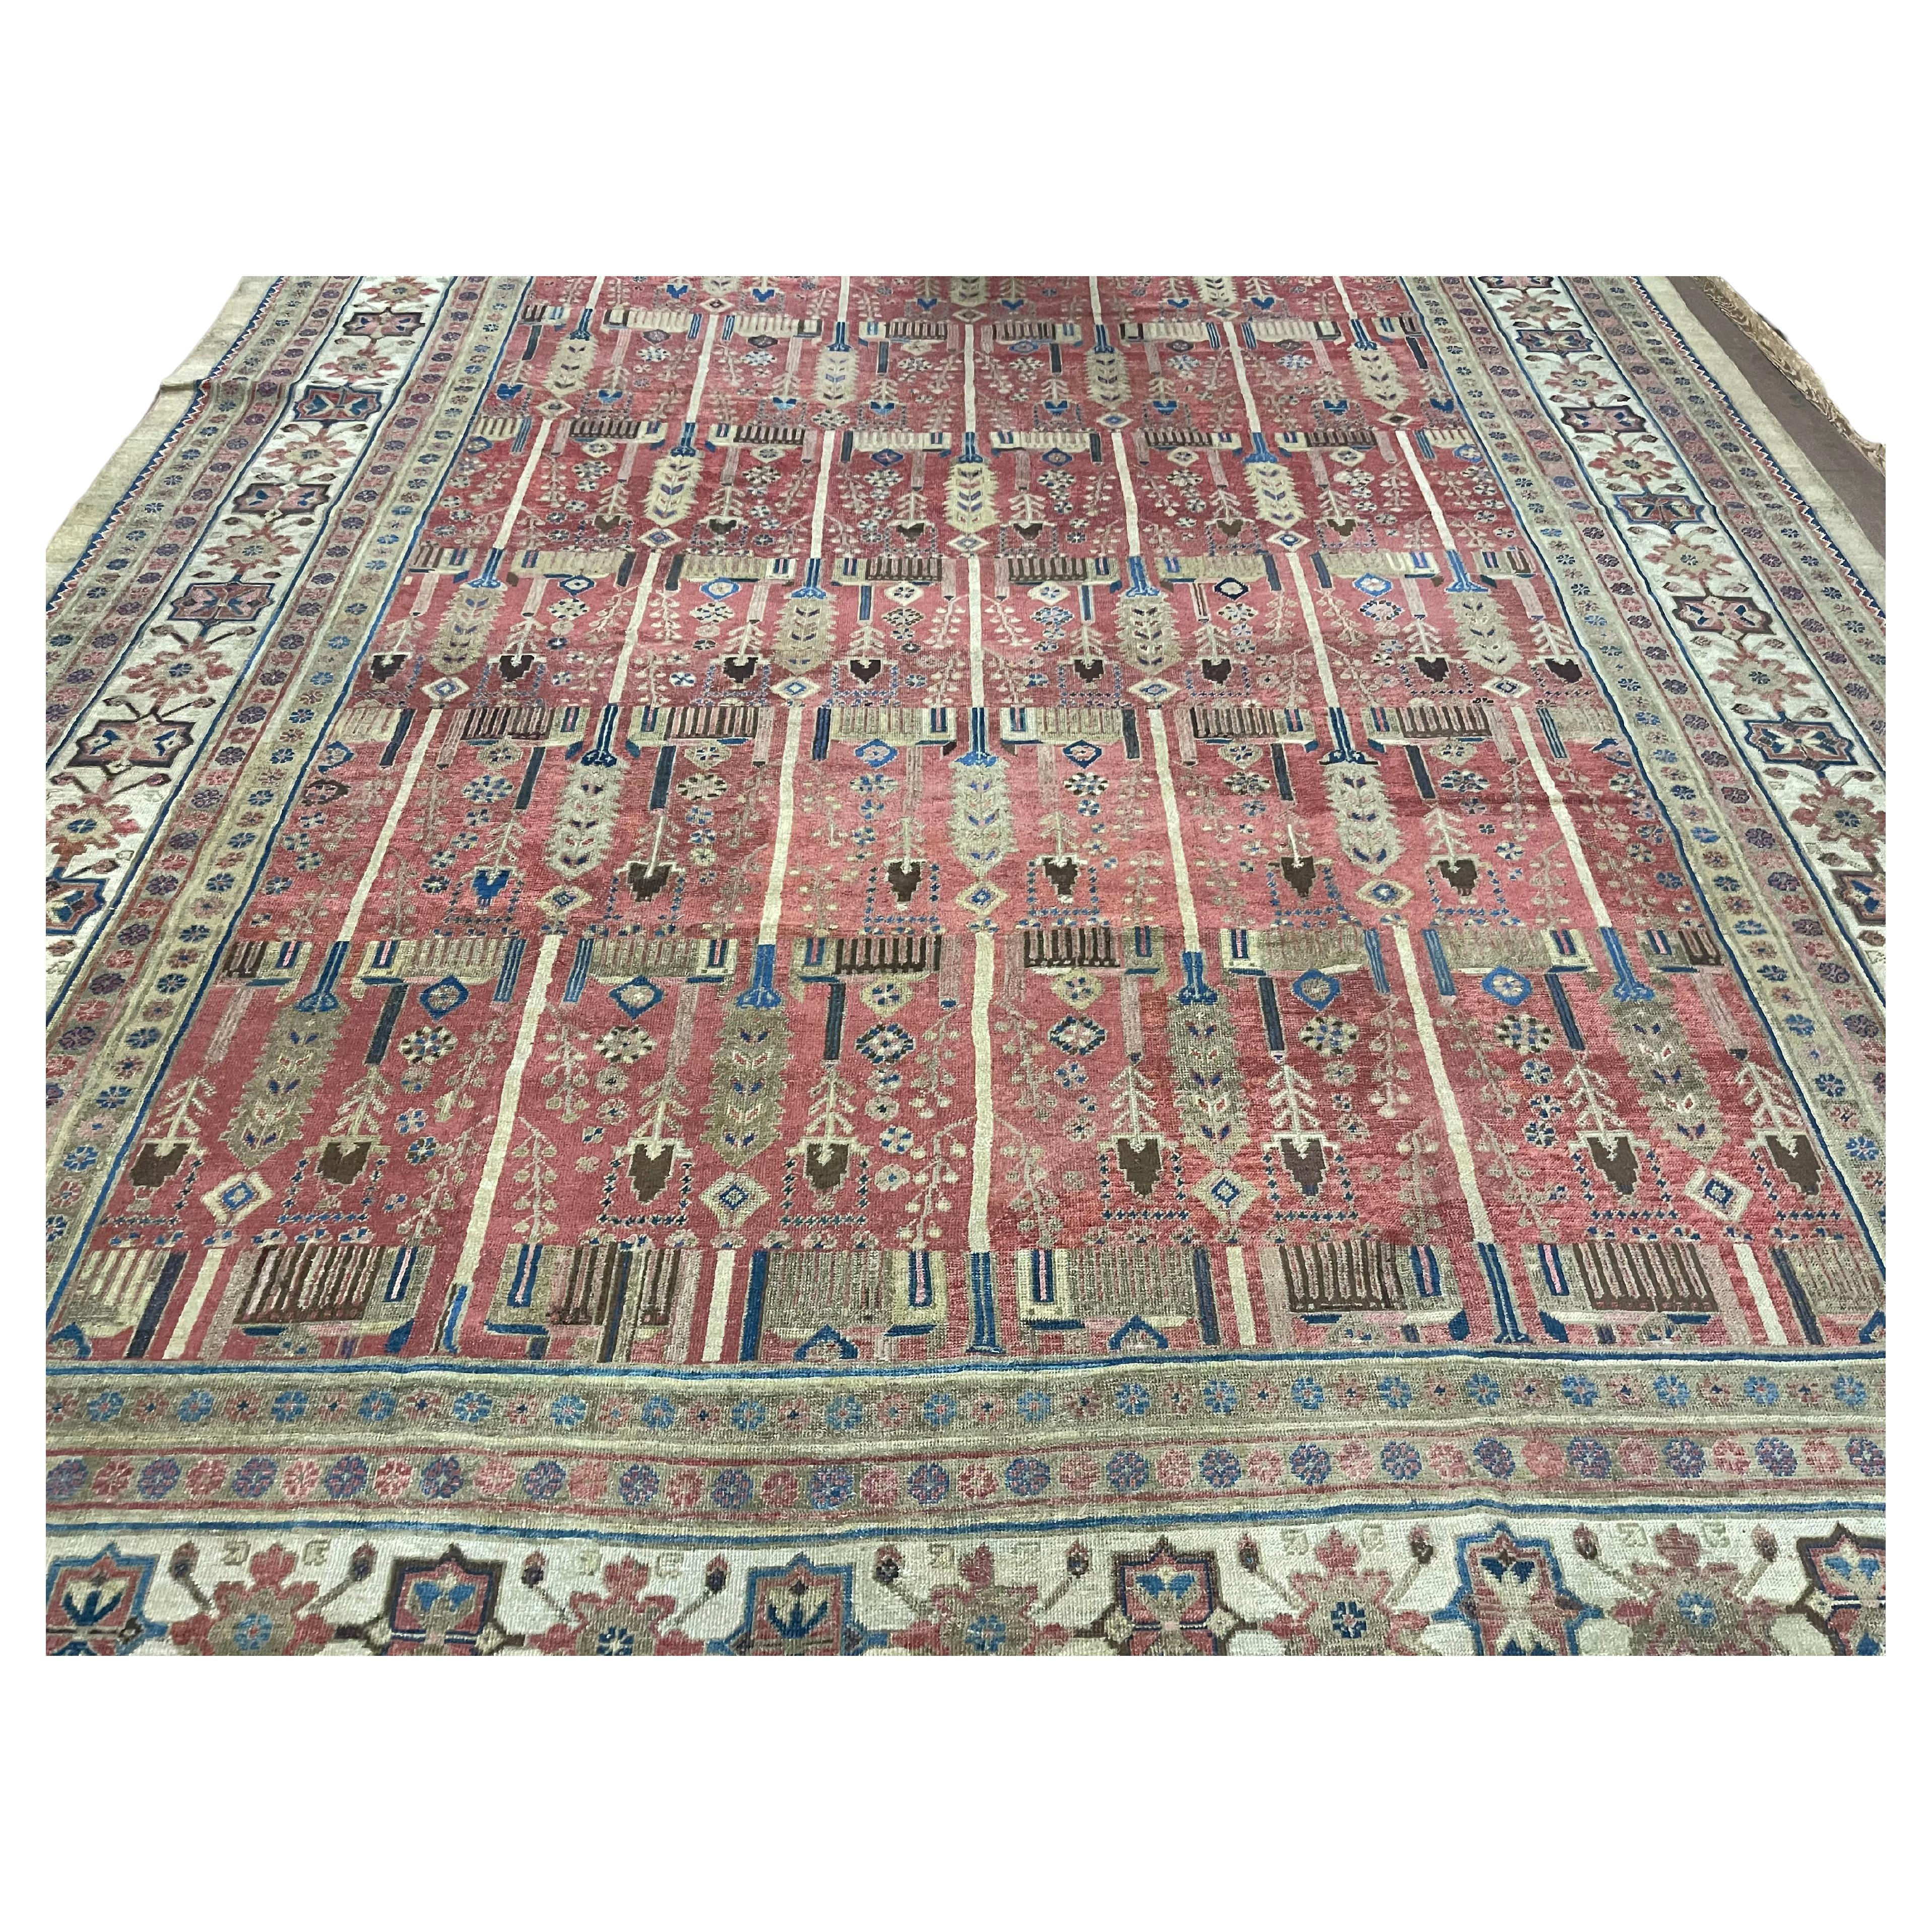 Handmade Antique Persian Bakhshaish Rug 12.2' x 15.8', 1880s - 1B21 For Sale